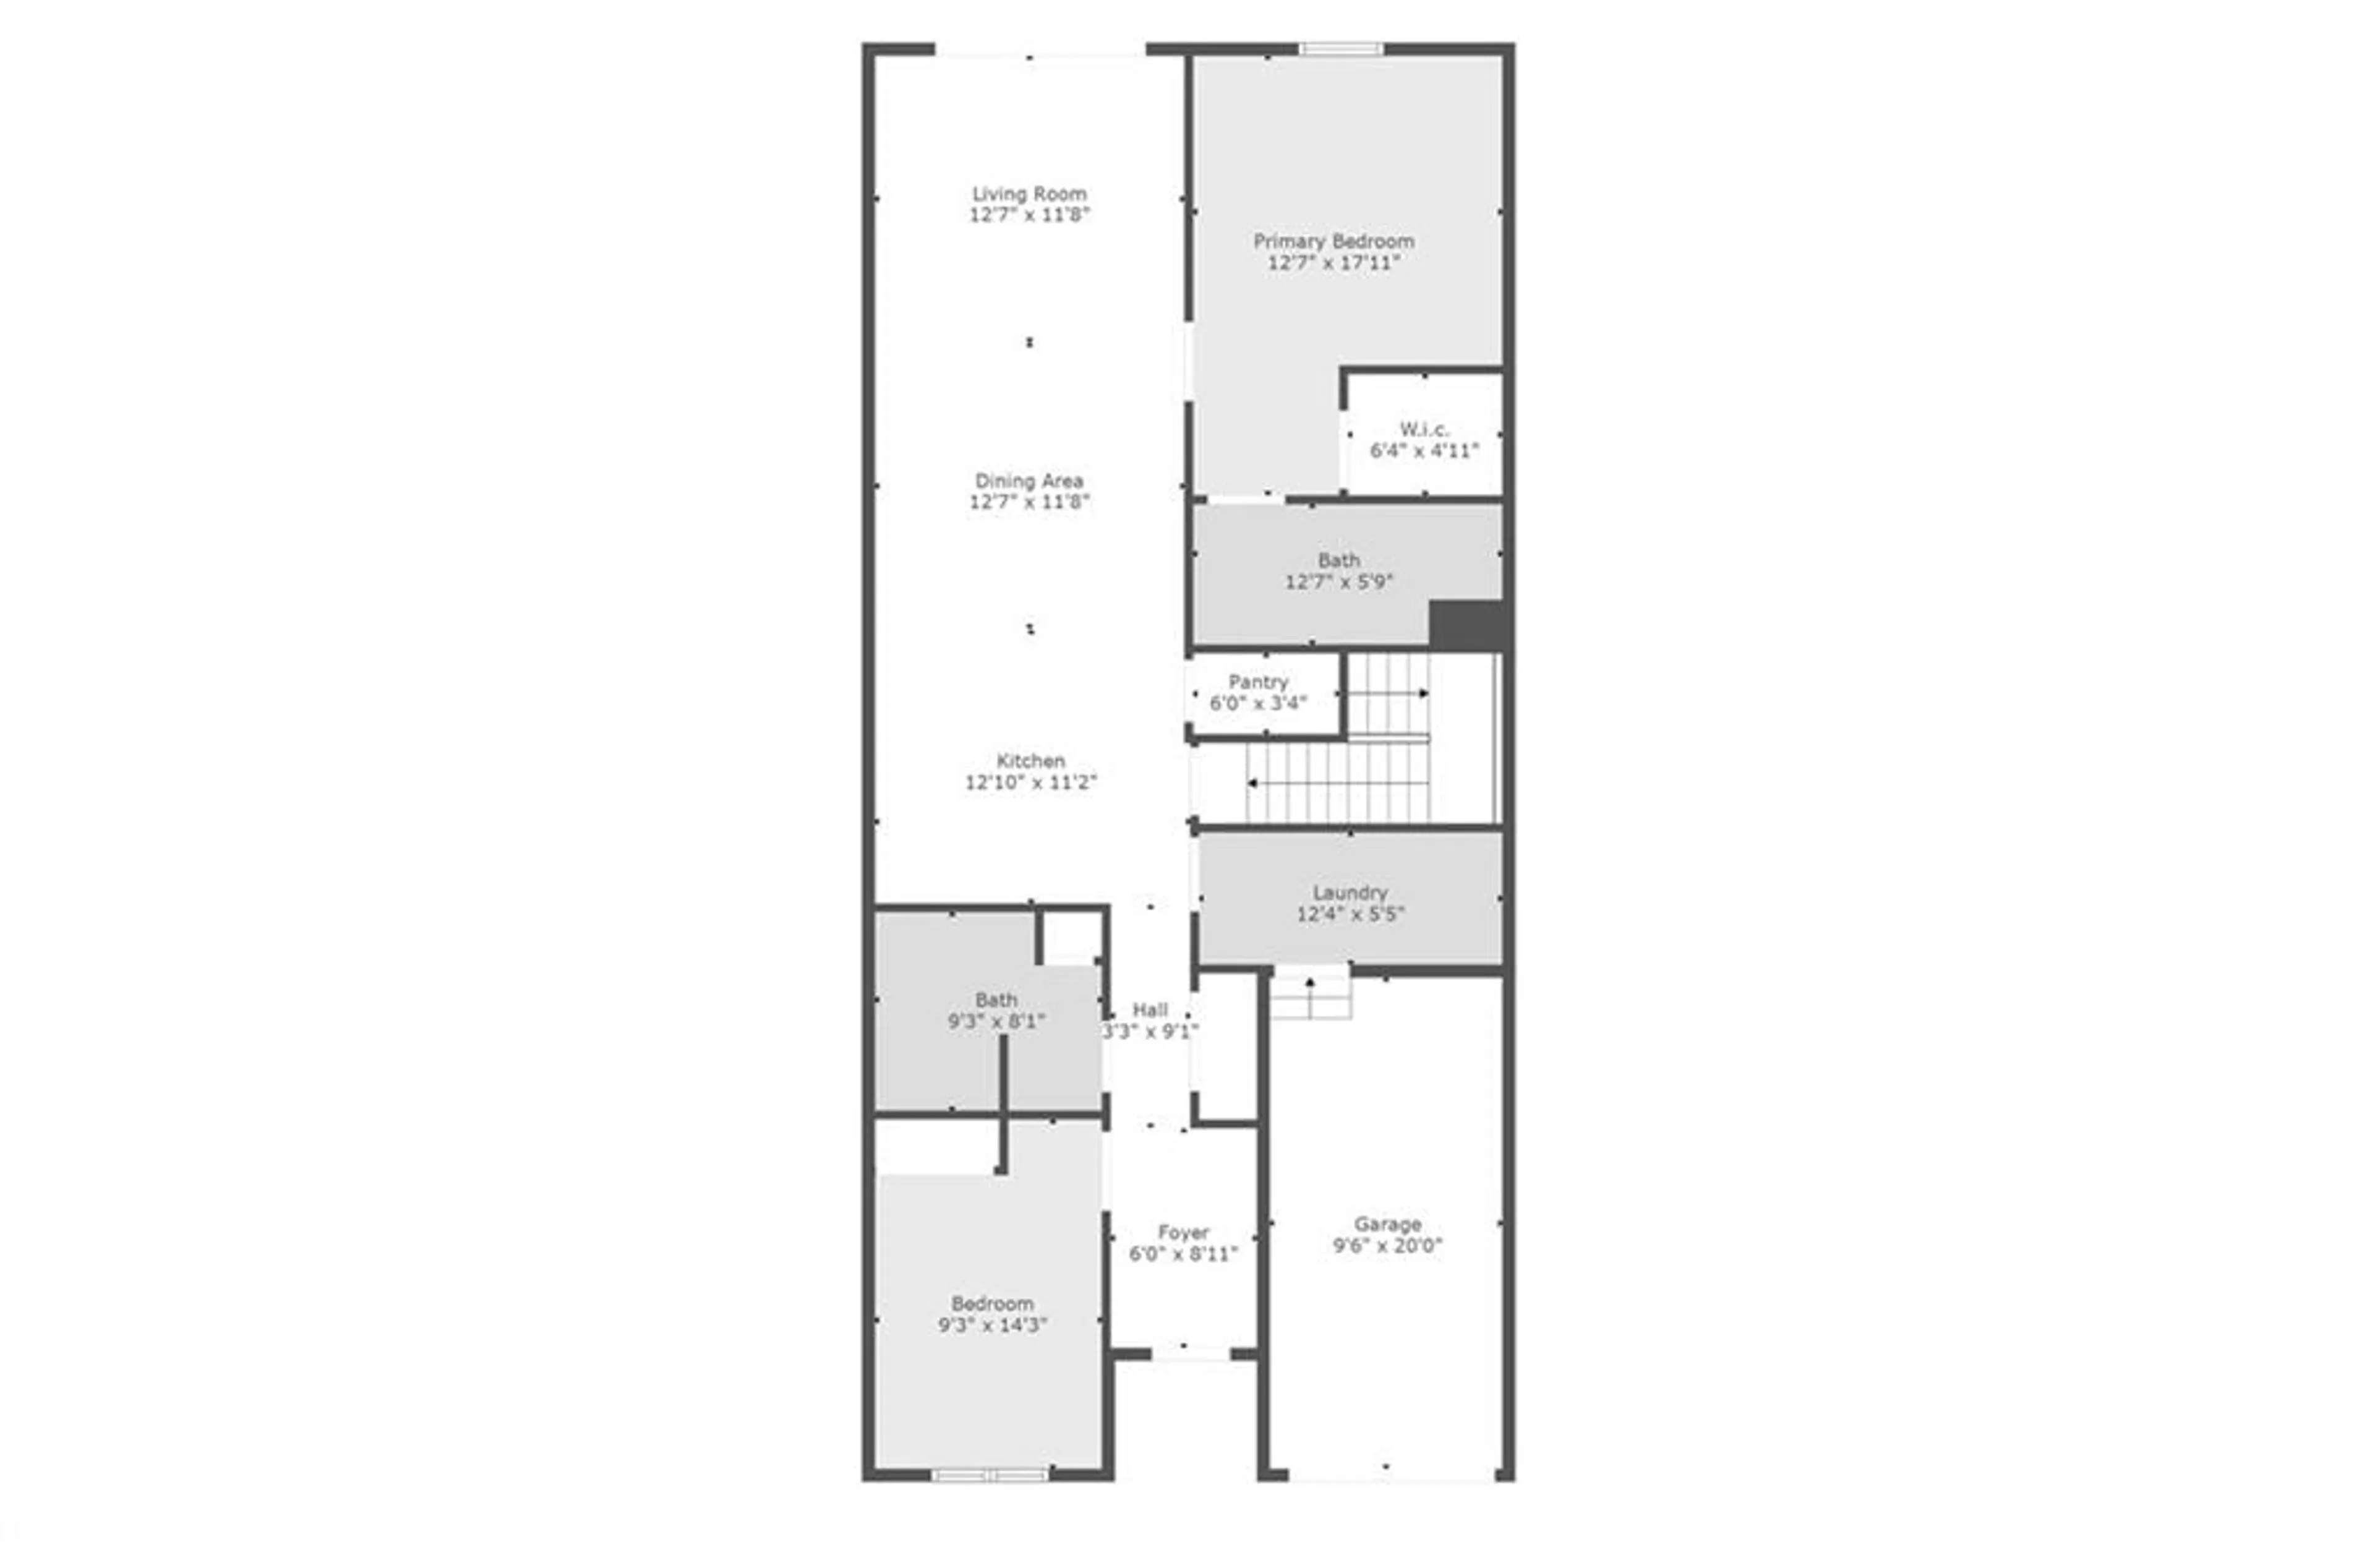 Floor plan for 18 Leannes Way, Orillia Ontario L3V 8M1